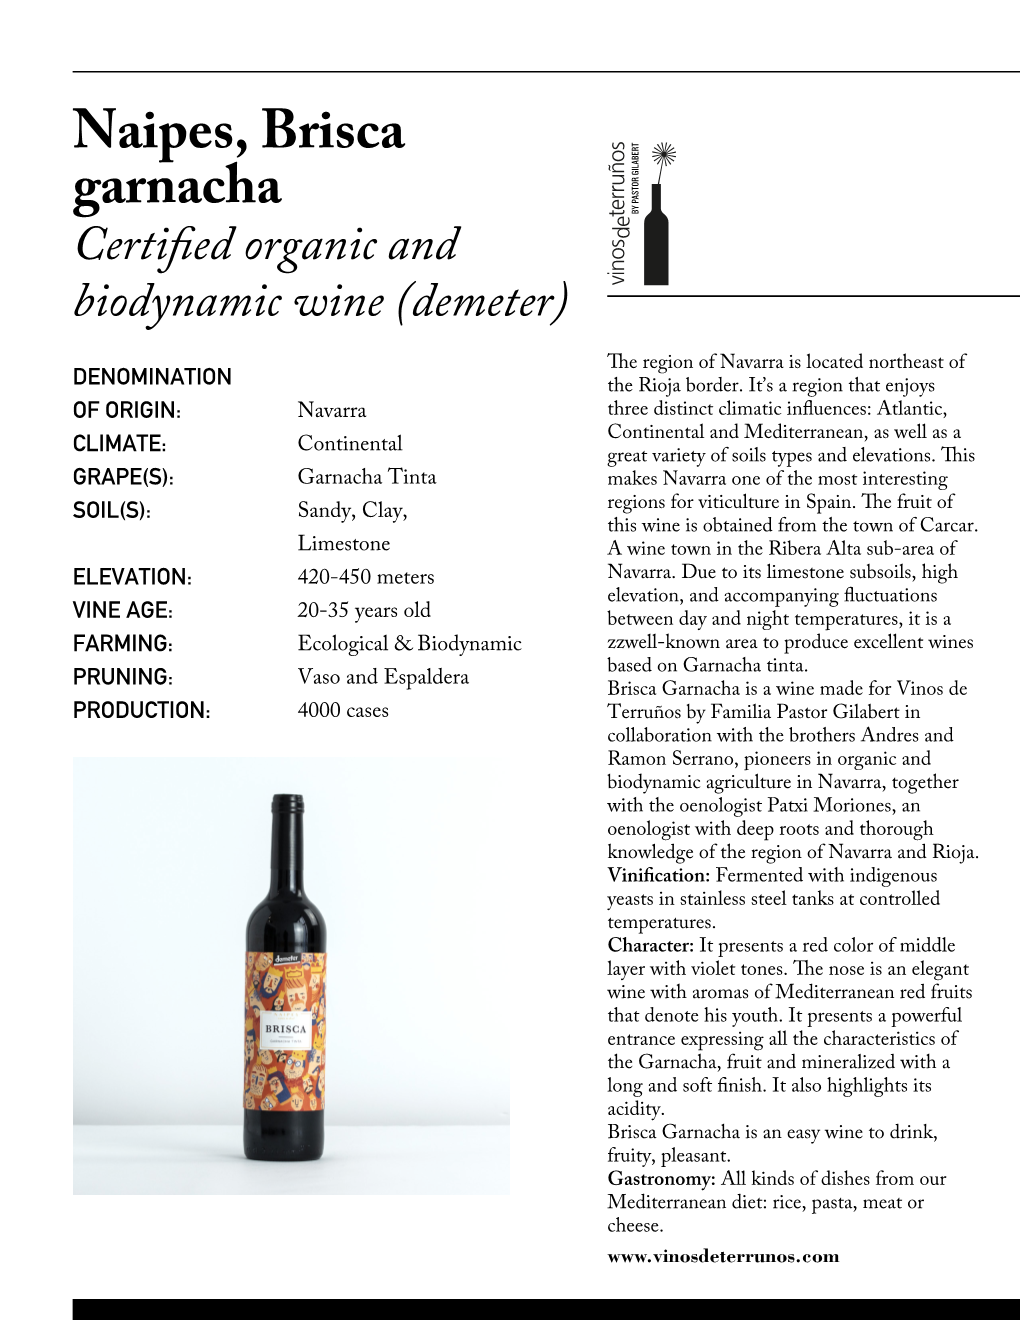 Naipes, Brisca Garnacha Certi Ed Organic and Biodynamic Wine (Demeter) DENOMINATION E Region of Navarra Is Located Northeast of the Rioja Border